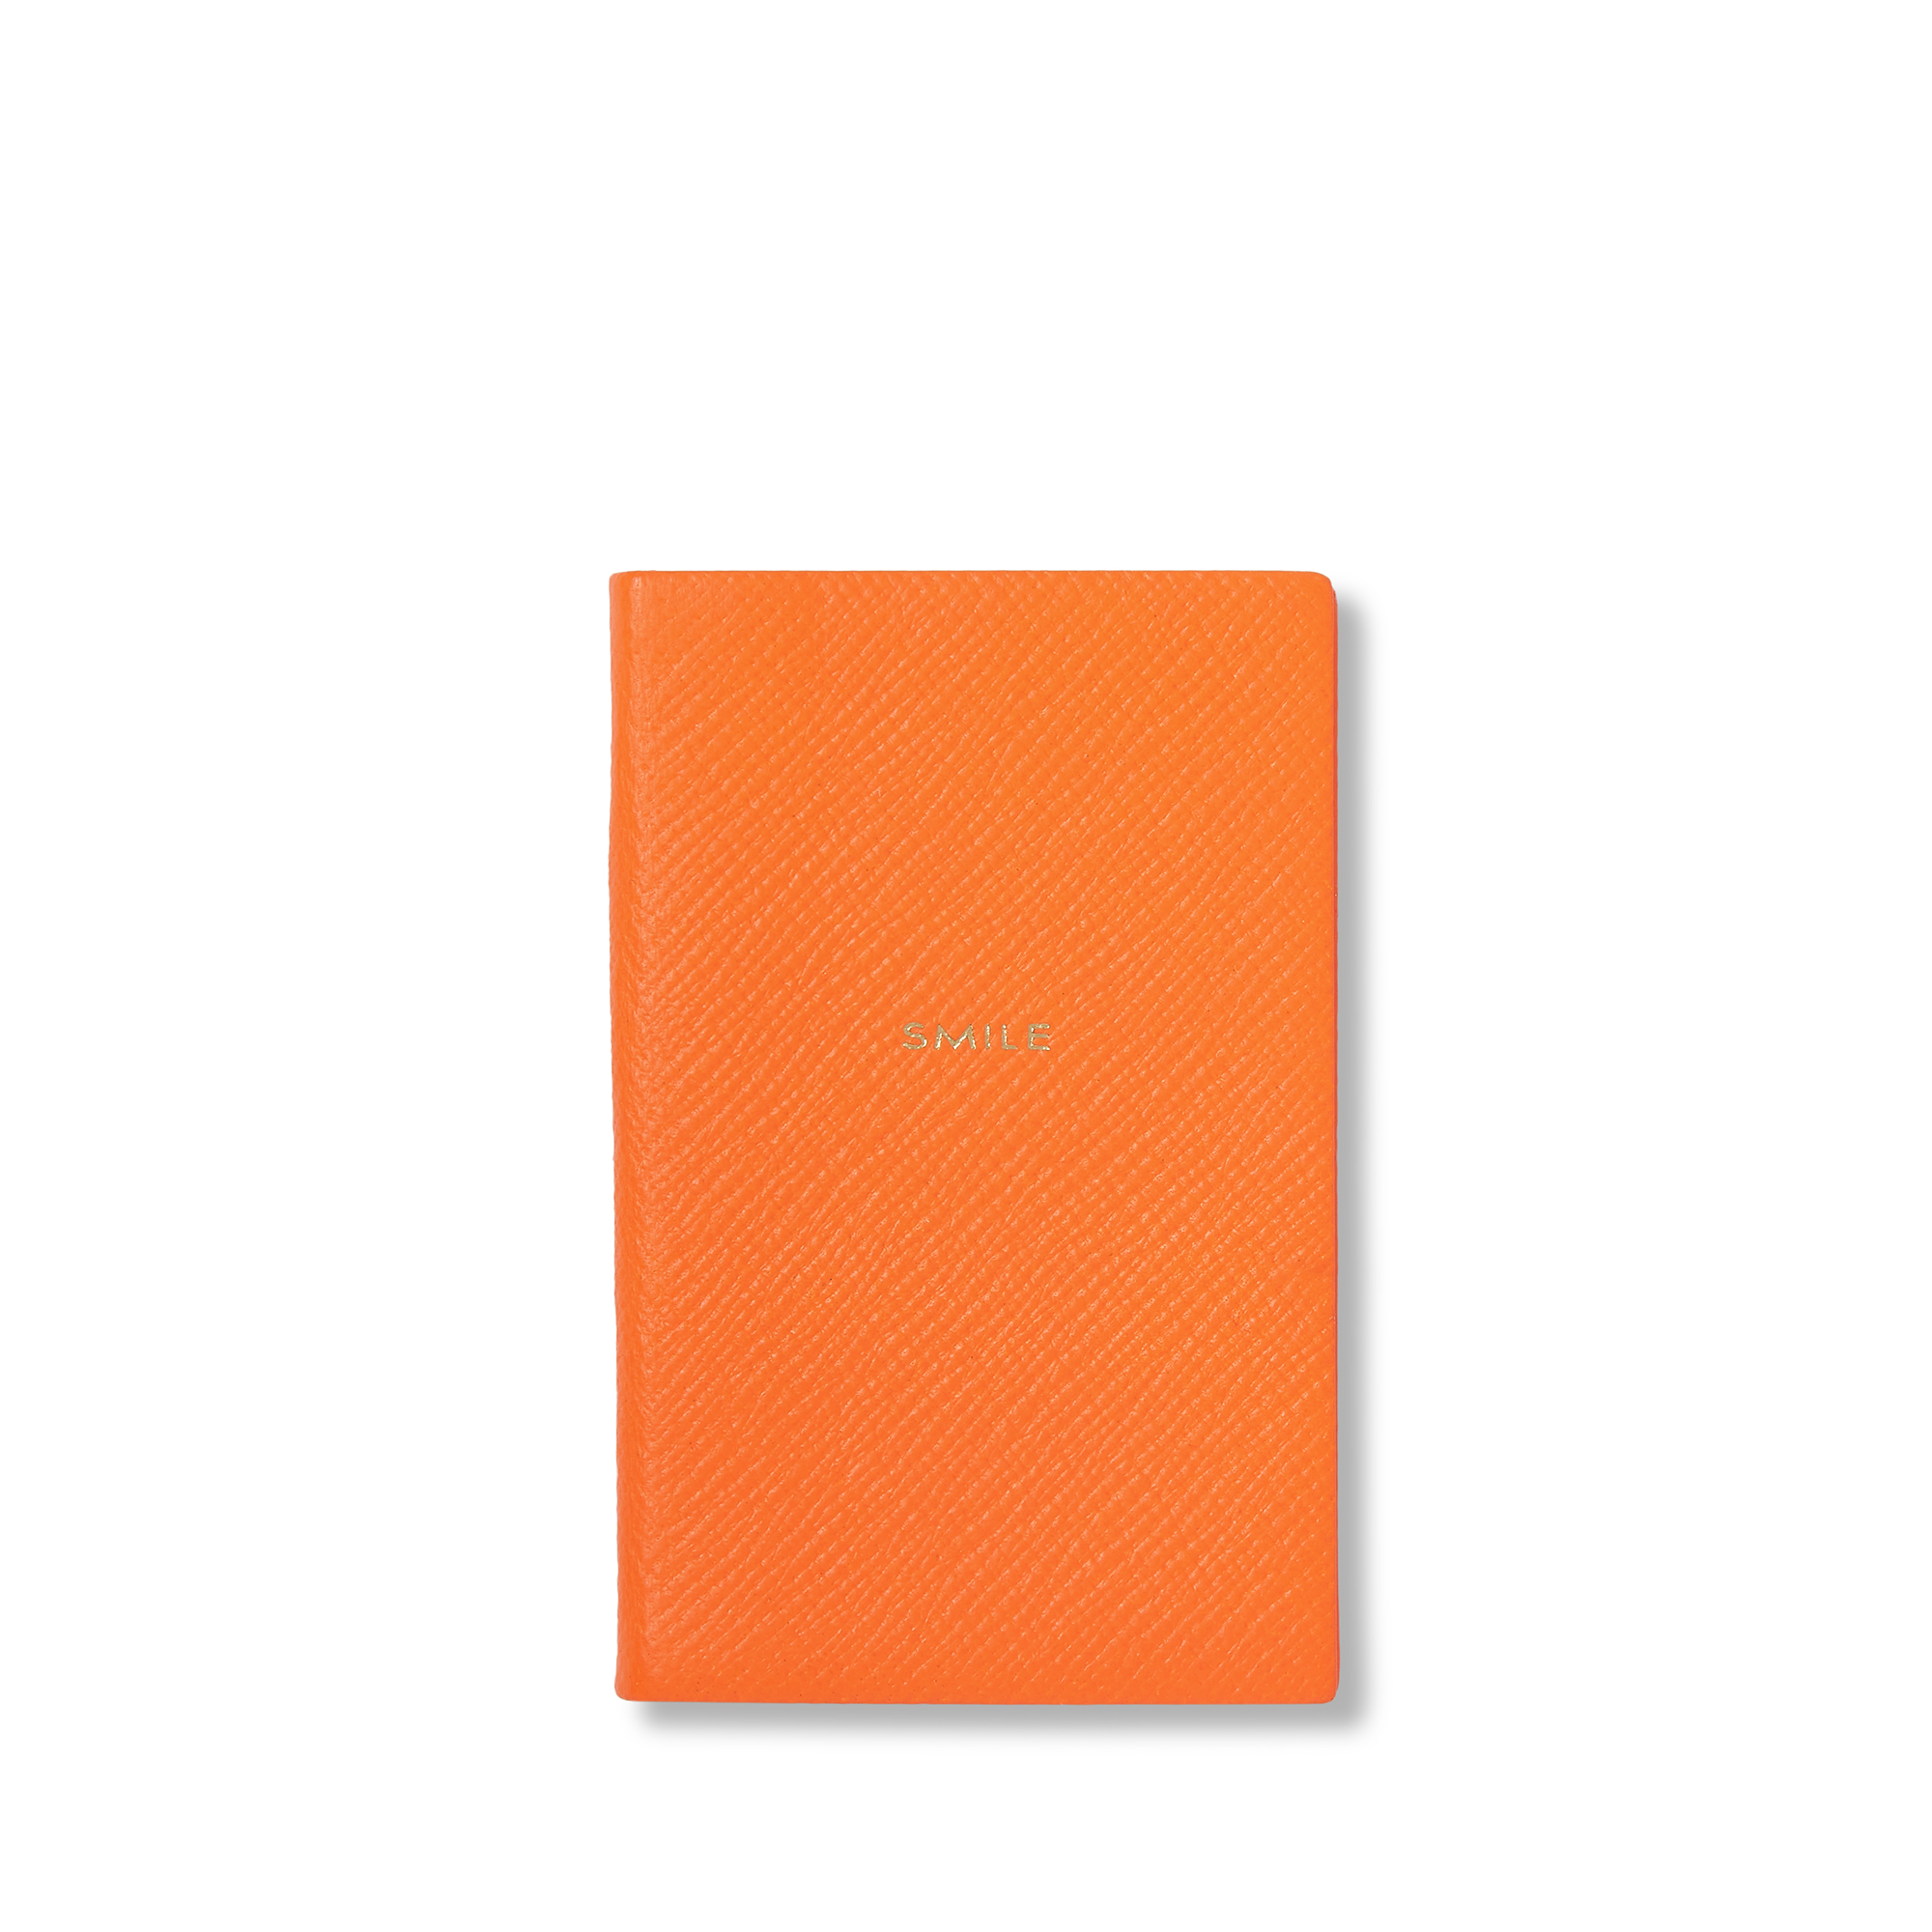 Smile Wafer Notebook in Panama in tangerine